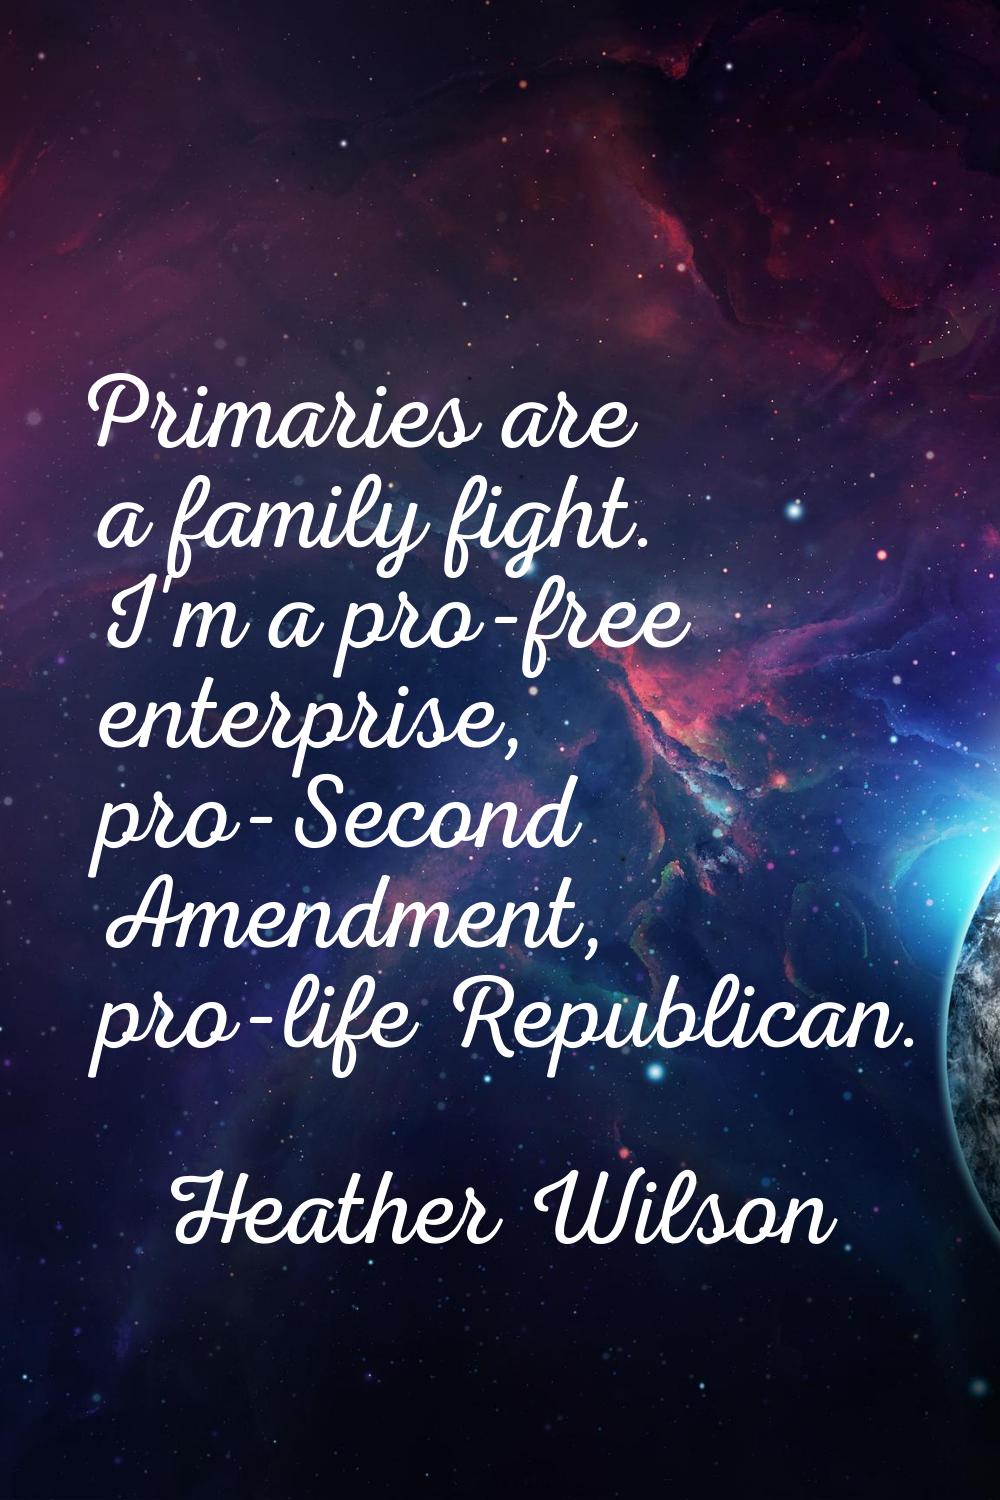 Primaries are a family fight. I'm a pro-free enterprise, pro-Second Amendment, pro-life Republican.